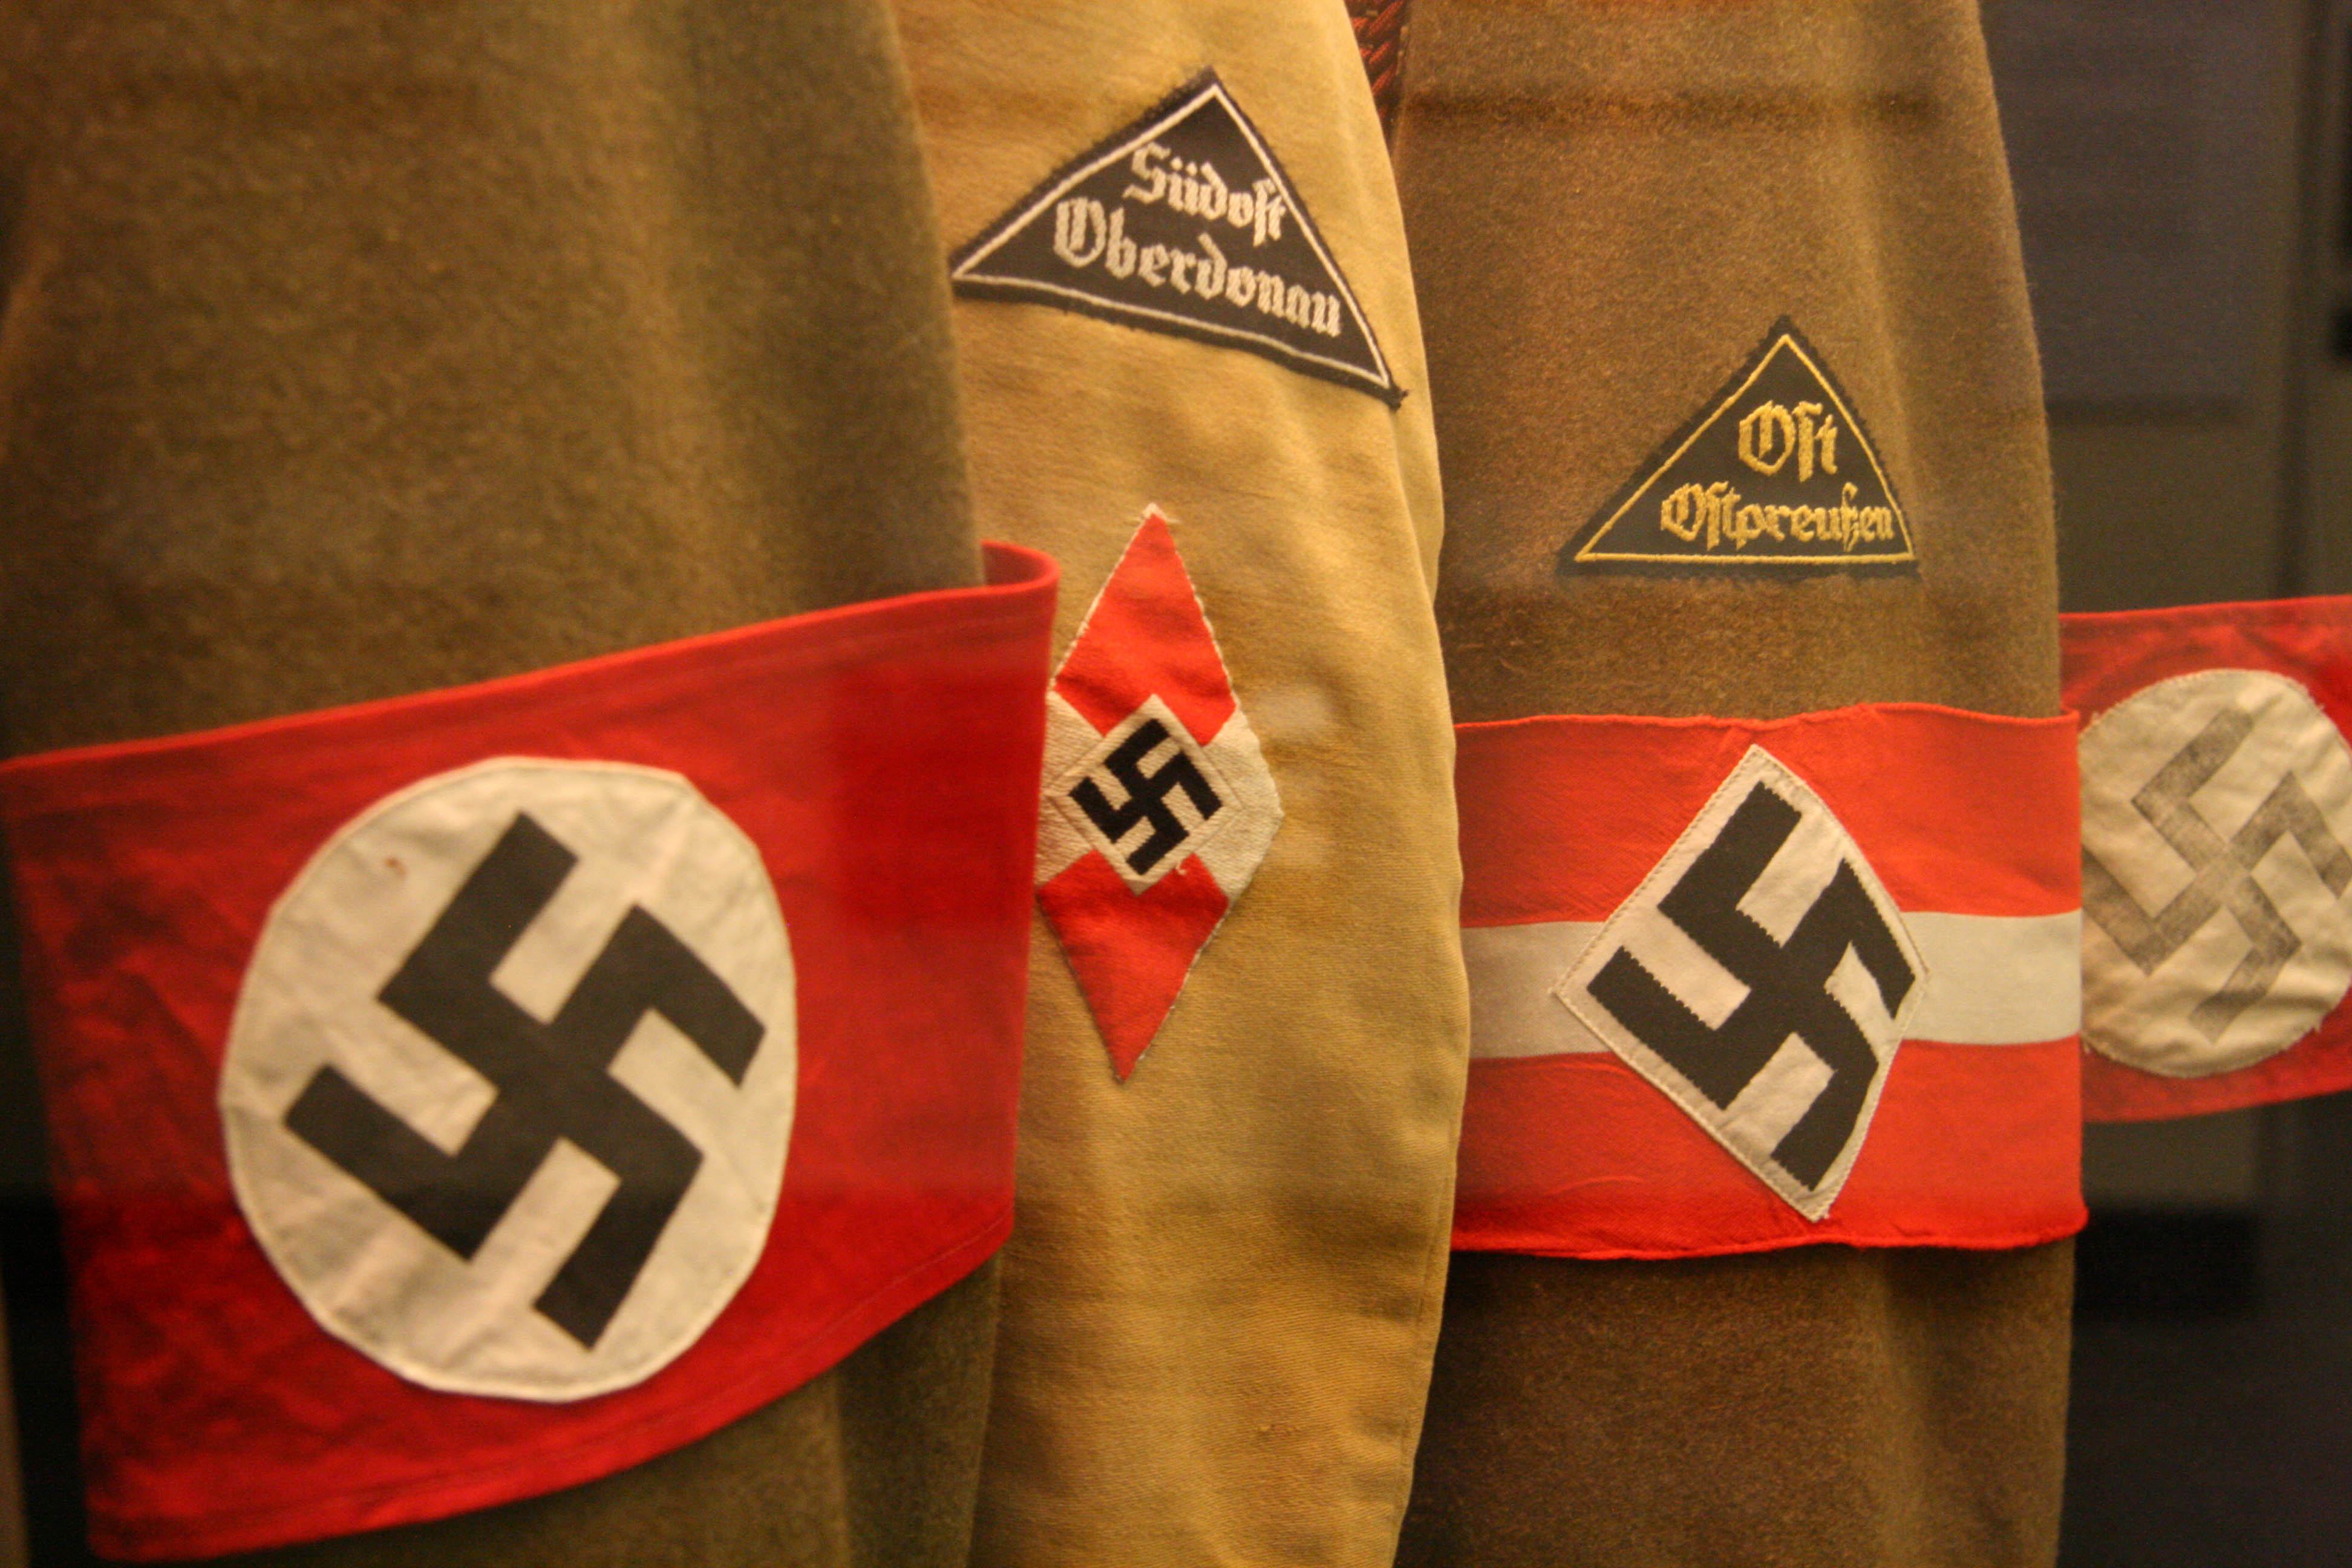 Nazi uniforms at the Deutsches Historisches Museum (German Historical Museum) in Berlin